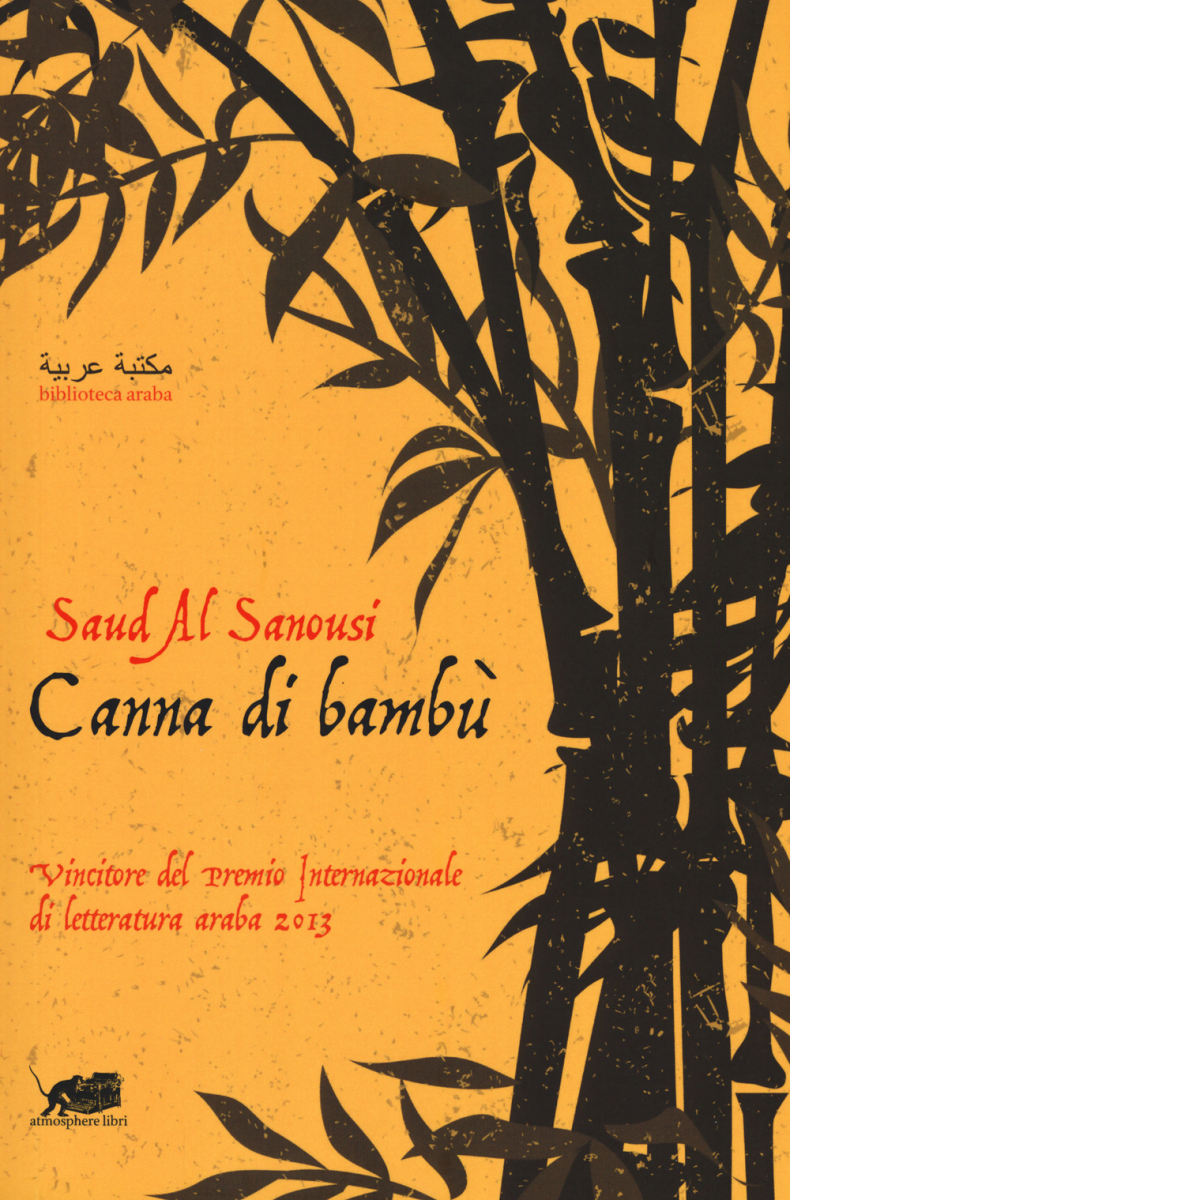 Canna di bamb? di Saud Al Sanousi,  2019,  Atmosphere Libri